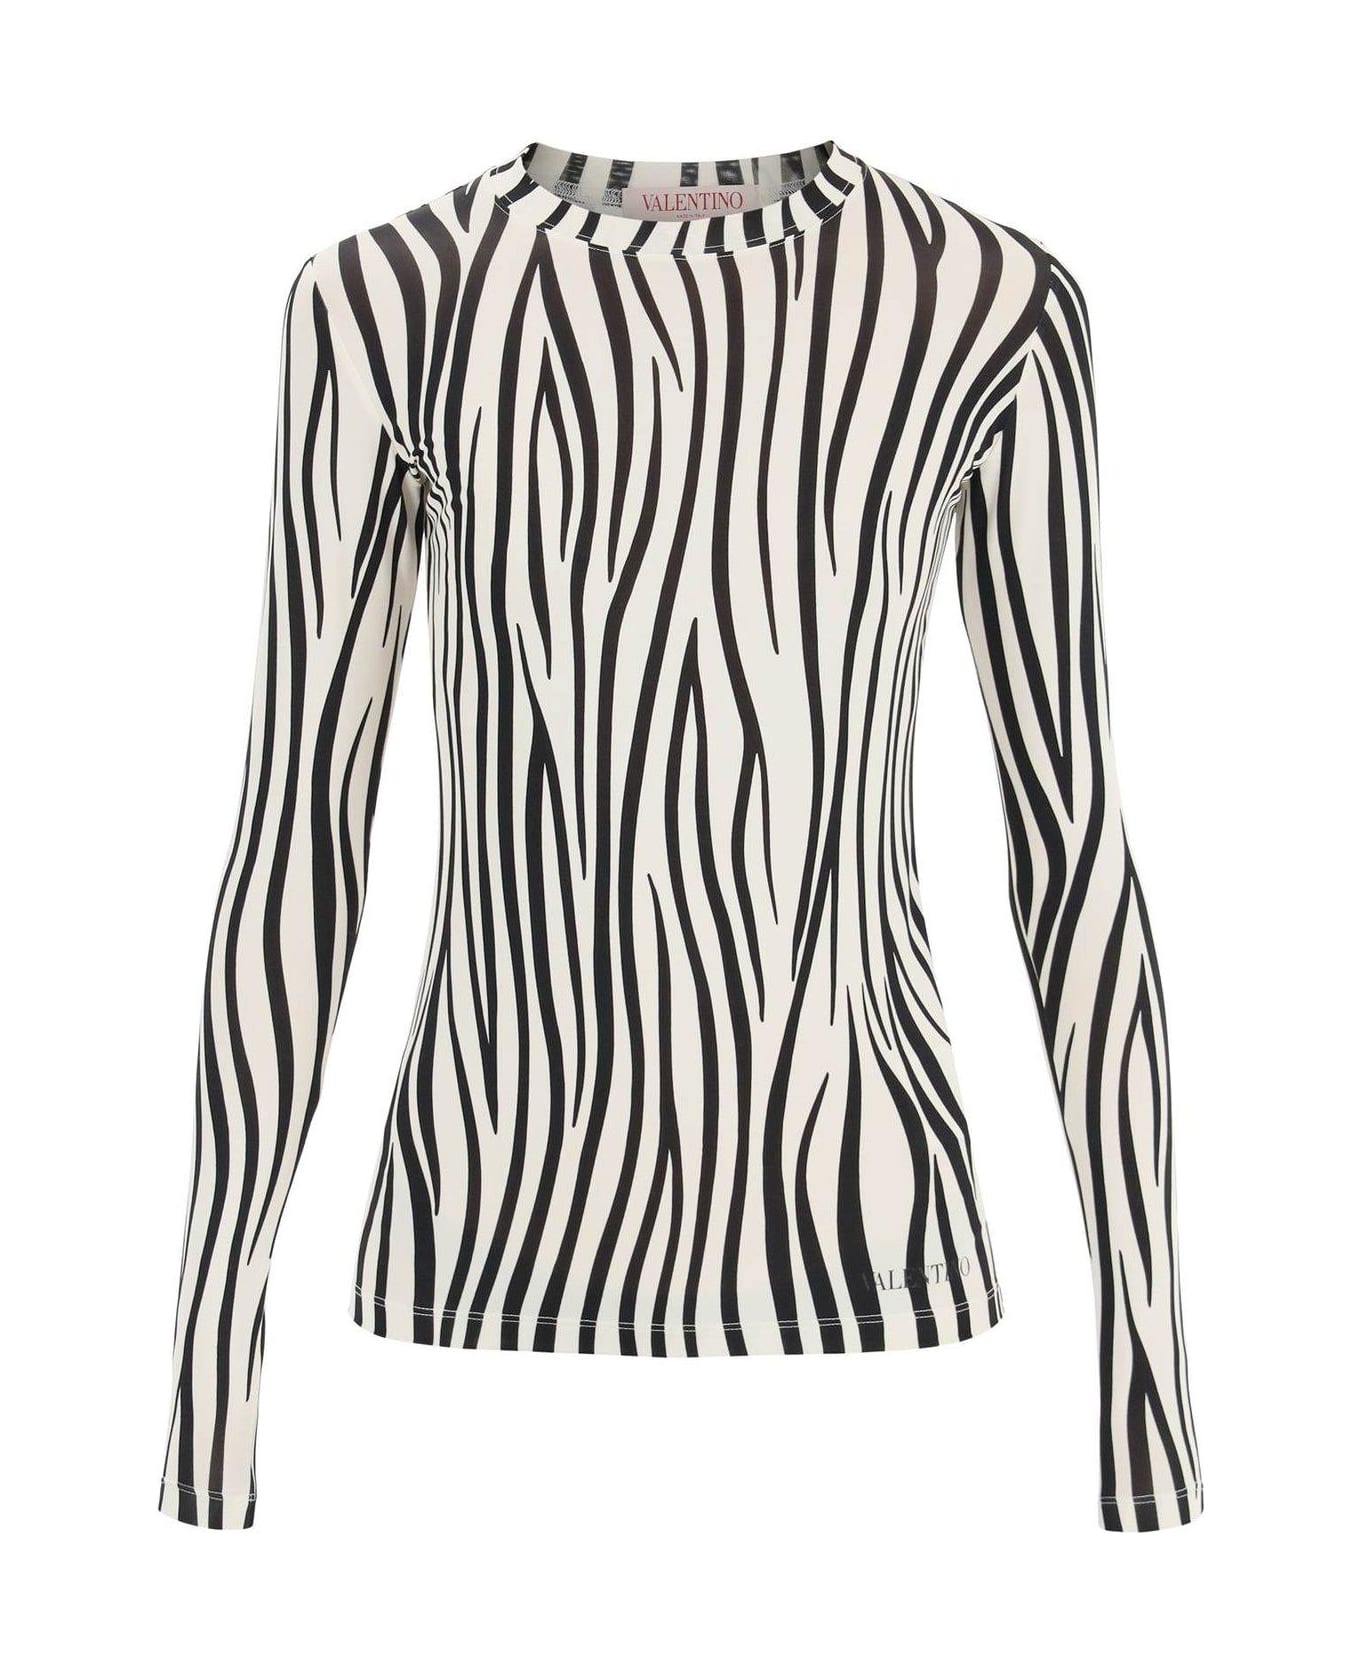 Valentino Zebra Printed Long-sleeved T-shirt - Bianco